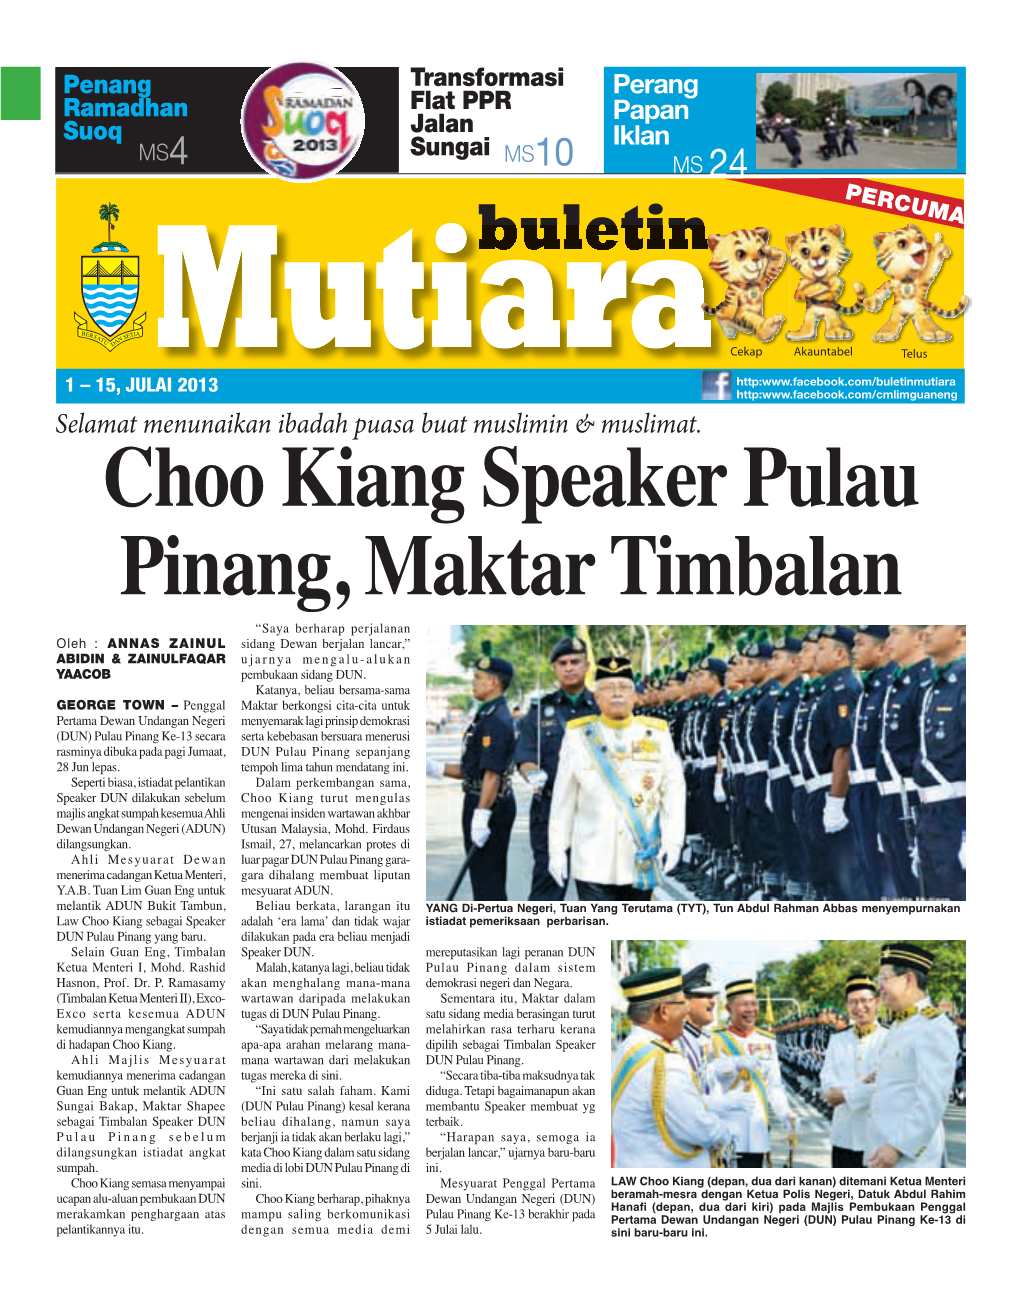 Choo Kiang Speaker Pulau Pinang, Maktar Timbalan